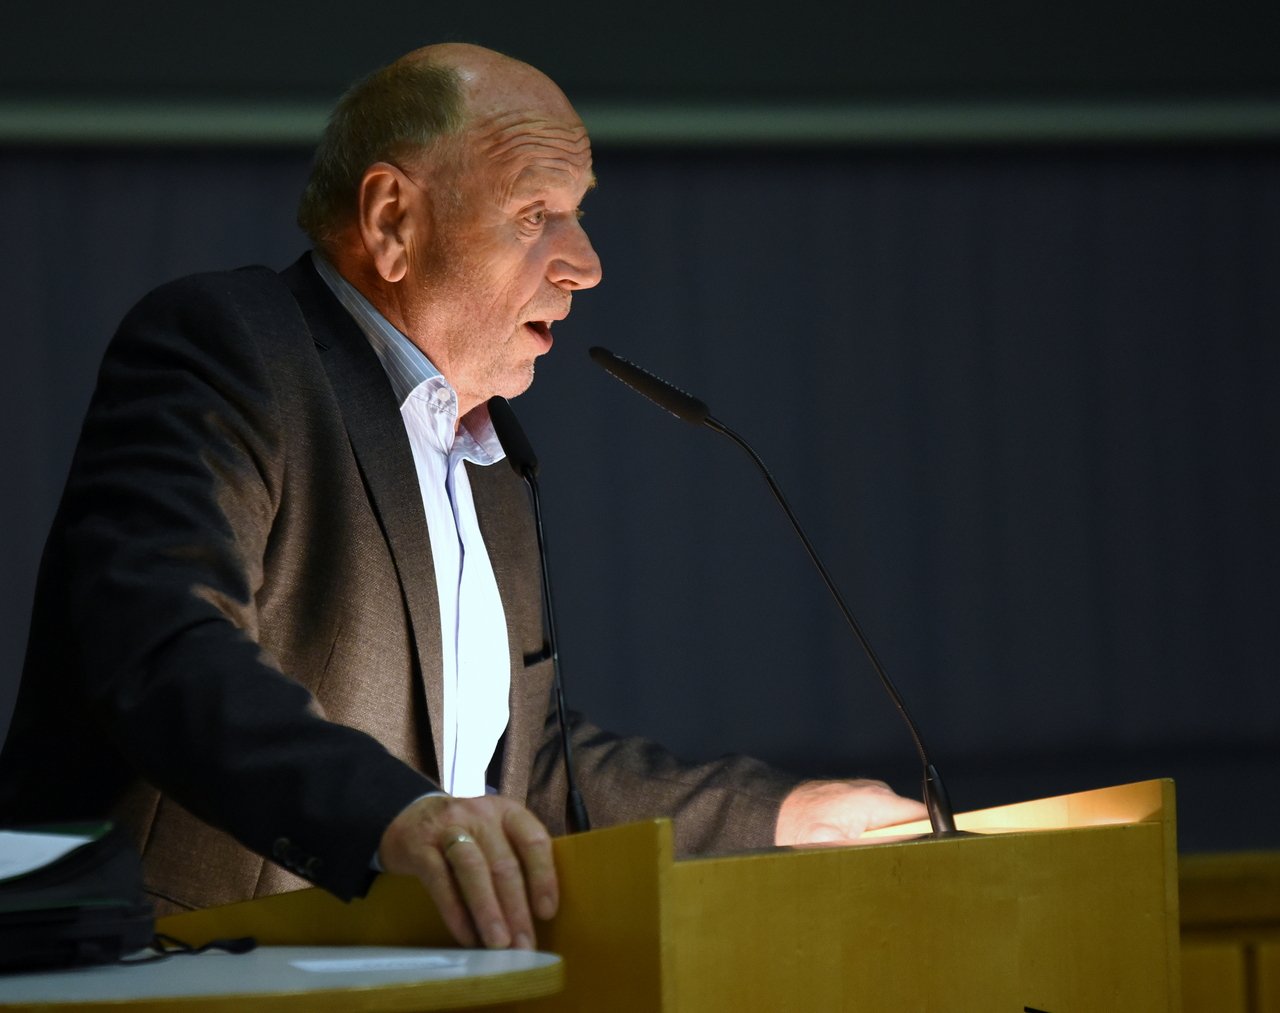 Simon Wittmann 1 CSU Kreisversammlung Delegiertenwahl 2018